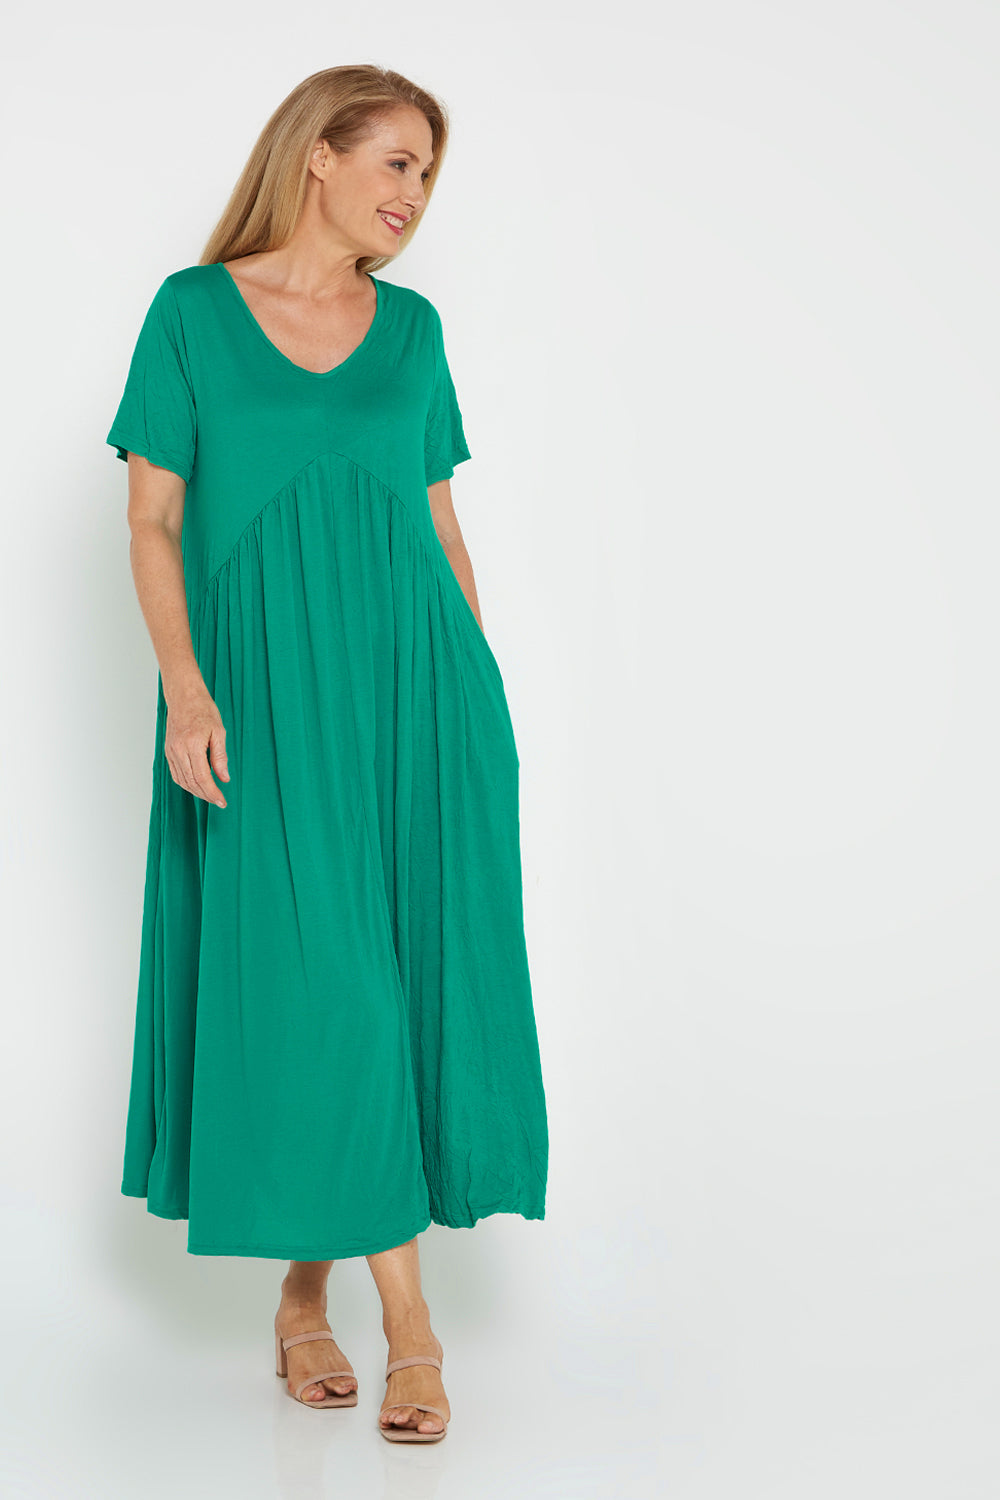 Halcyon Dress - Jade | Cotton Village | TULIO for Mature Fashion ...